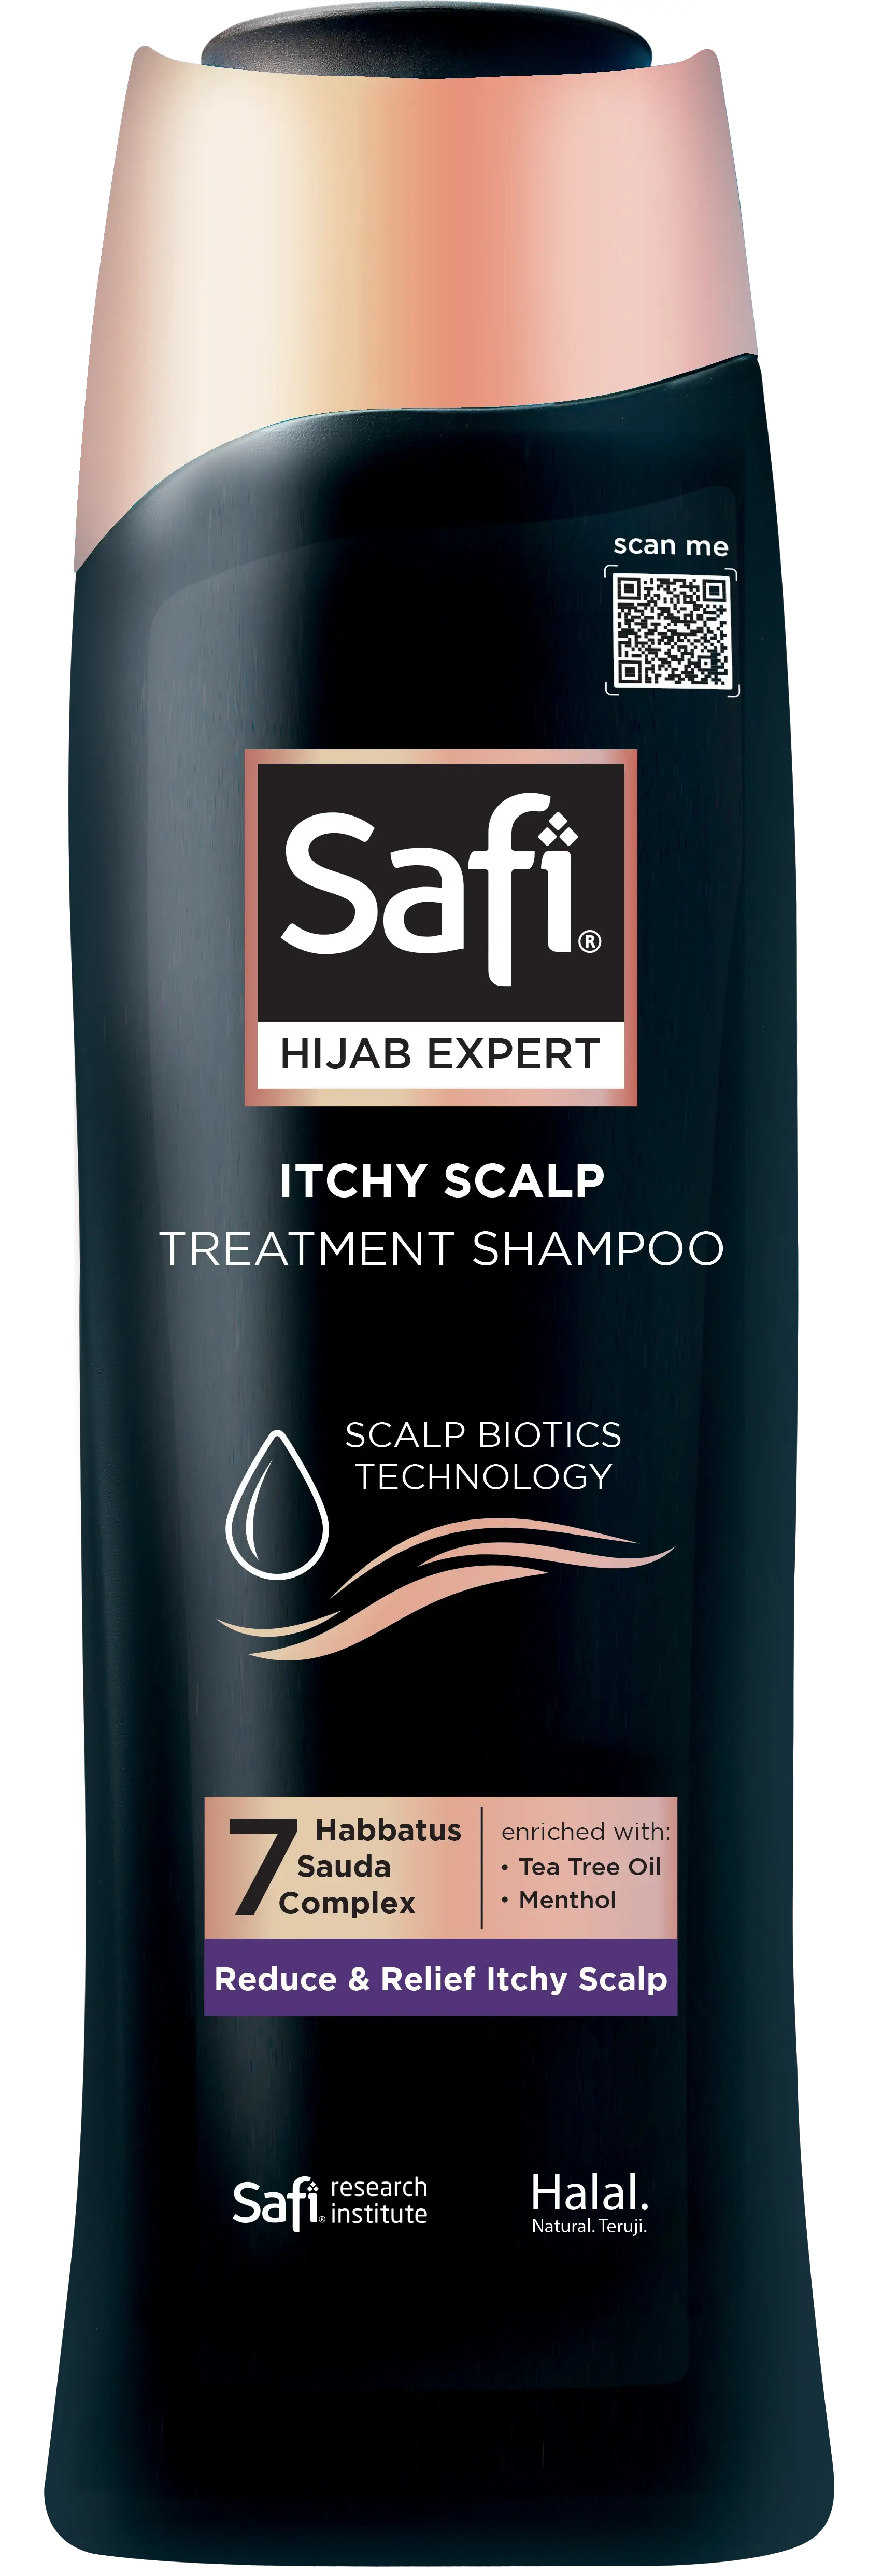 Safi Hijab Expert Itchy Scalp Treatment Shampoo